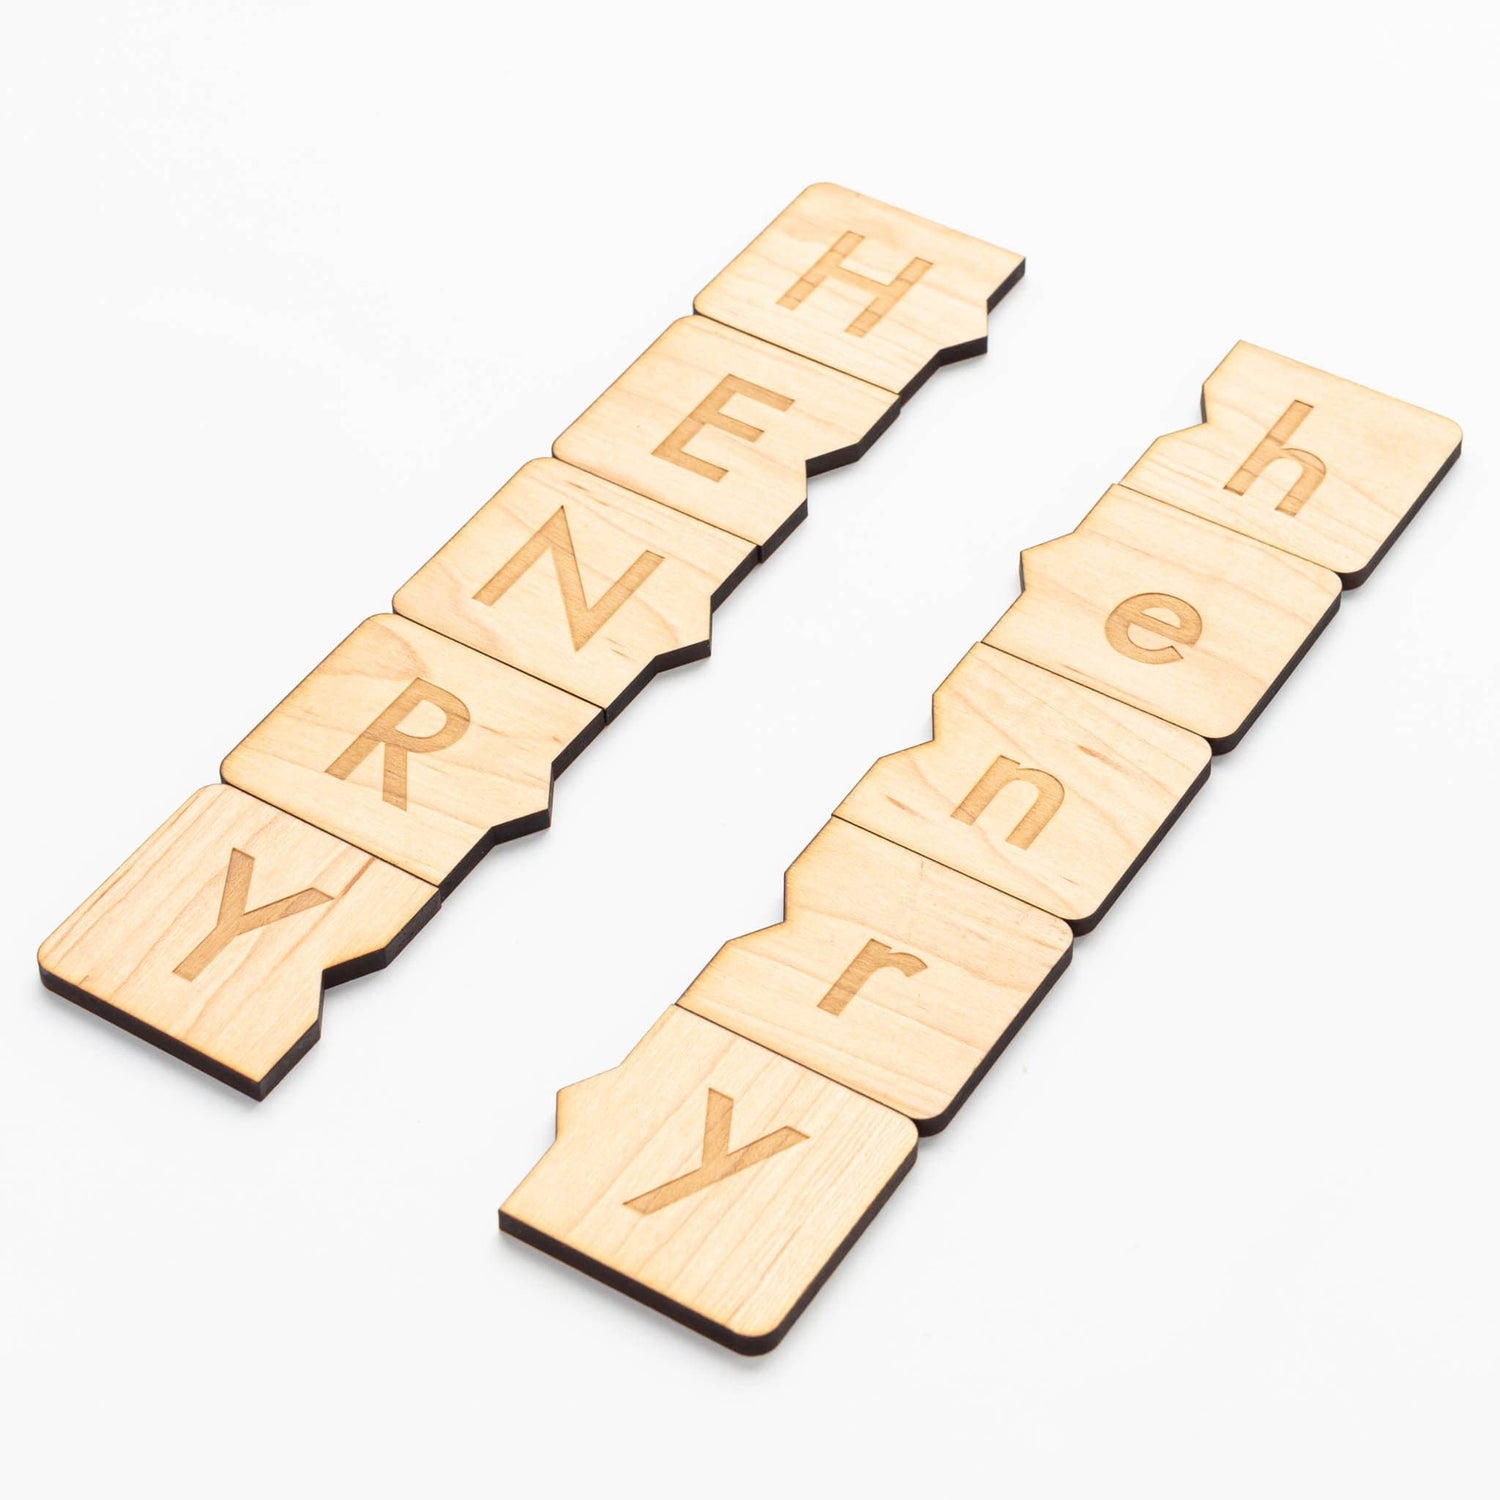 Gladfolk Educational Wooden Alphabet Puzzle & Letter Matching Game